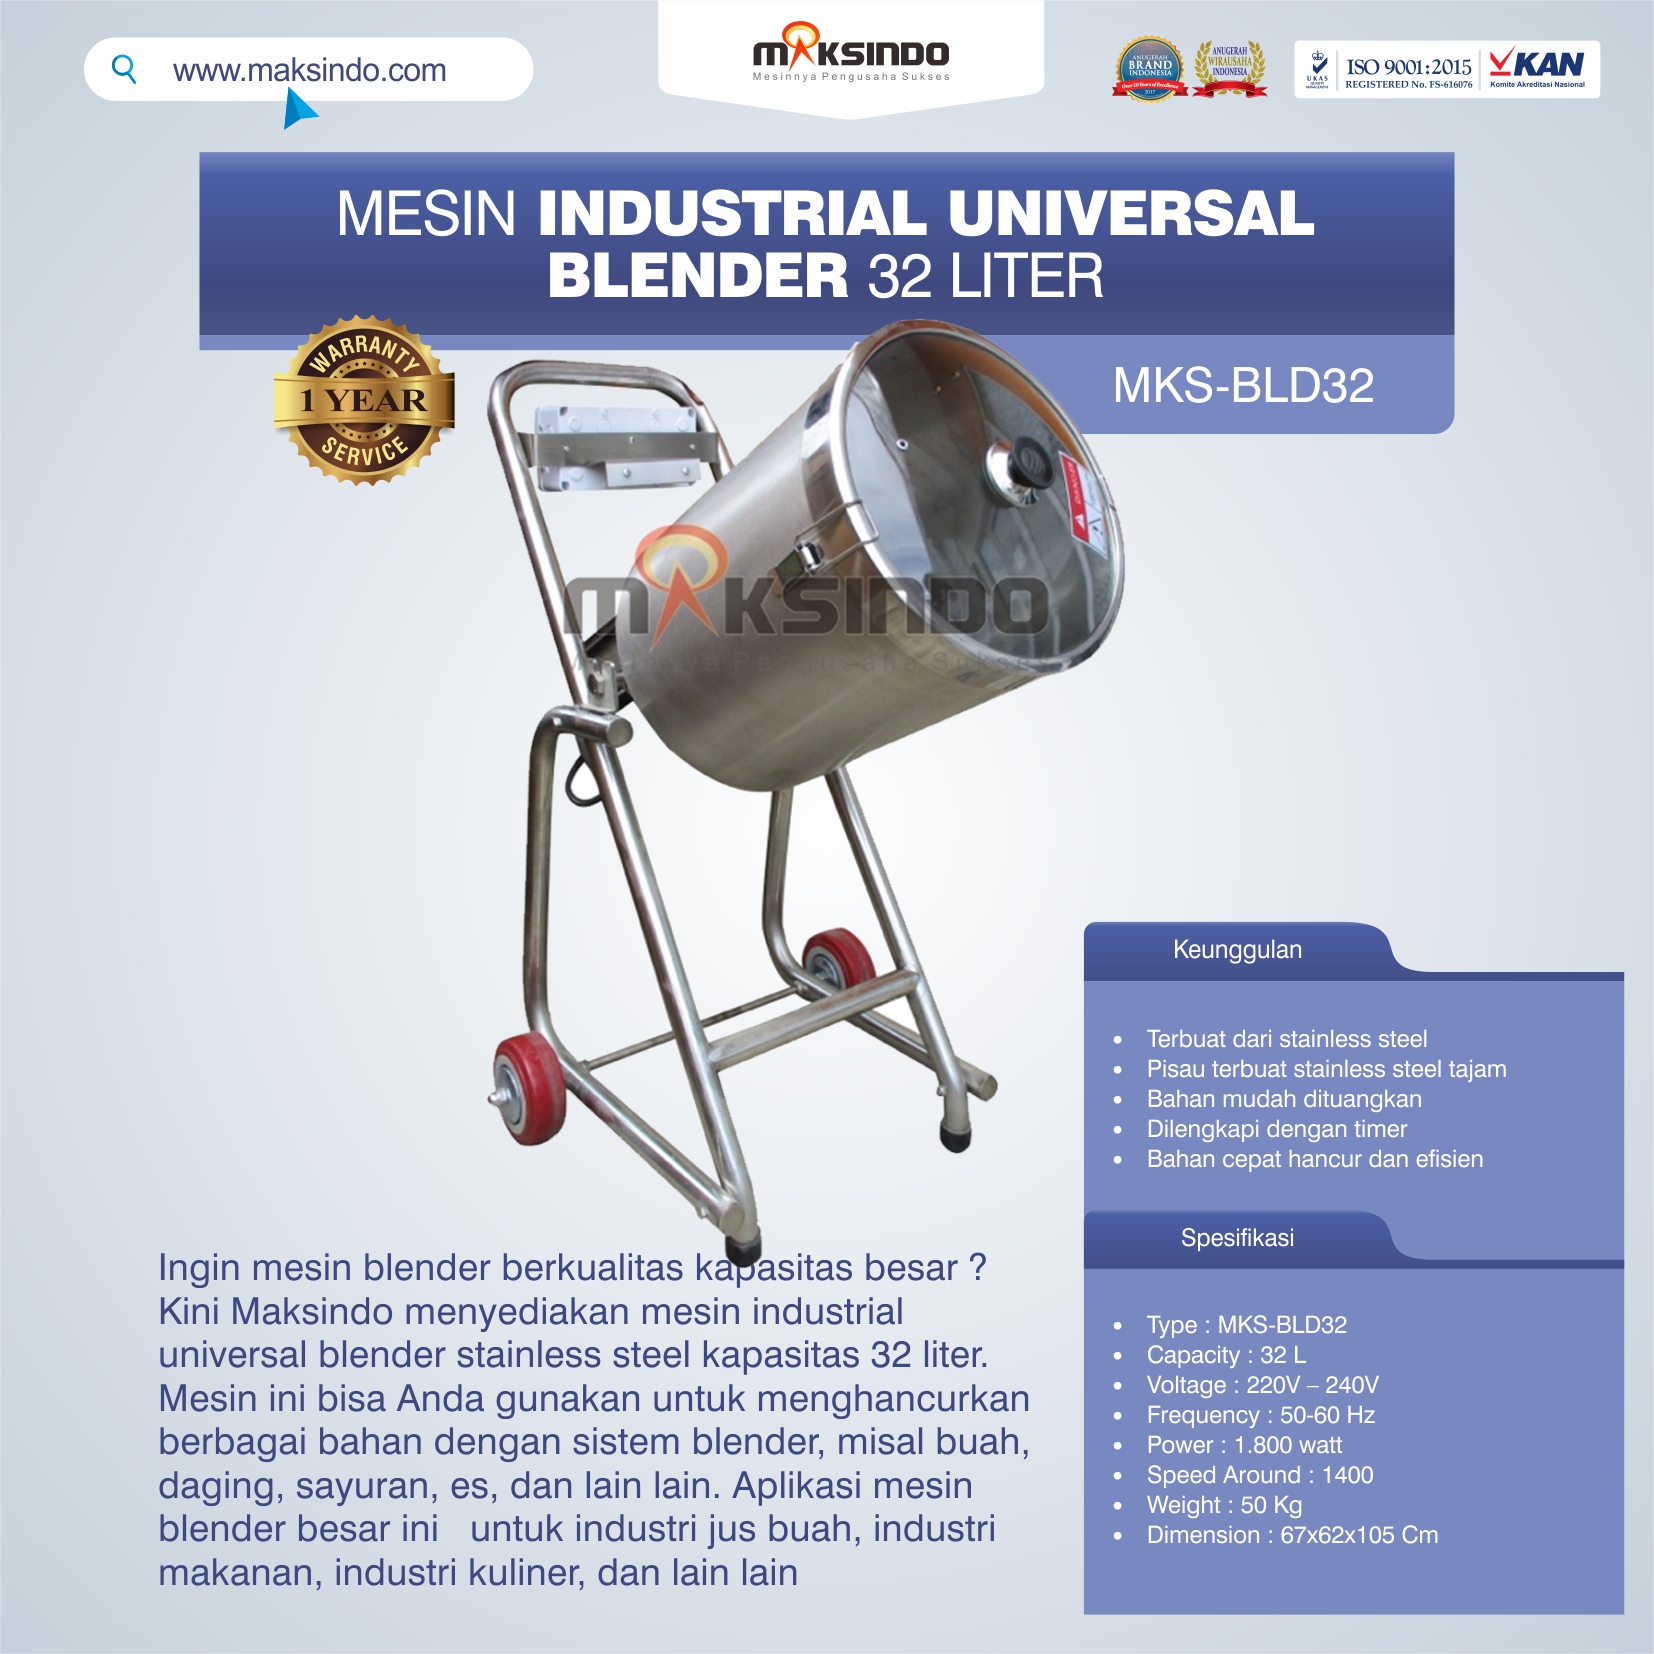 Jual Industrial Universal Blender 32 Liter di Jakarta